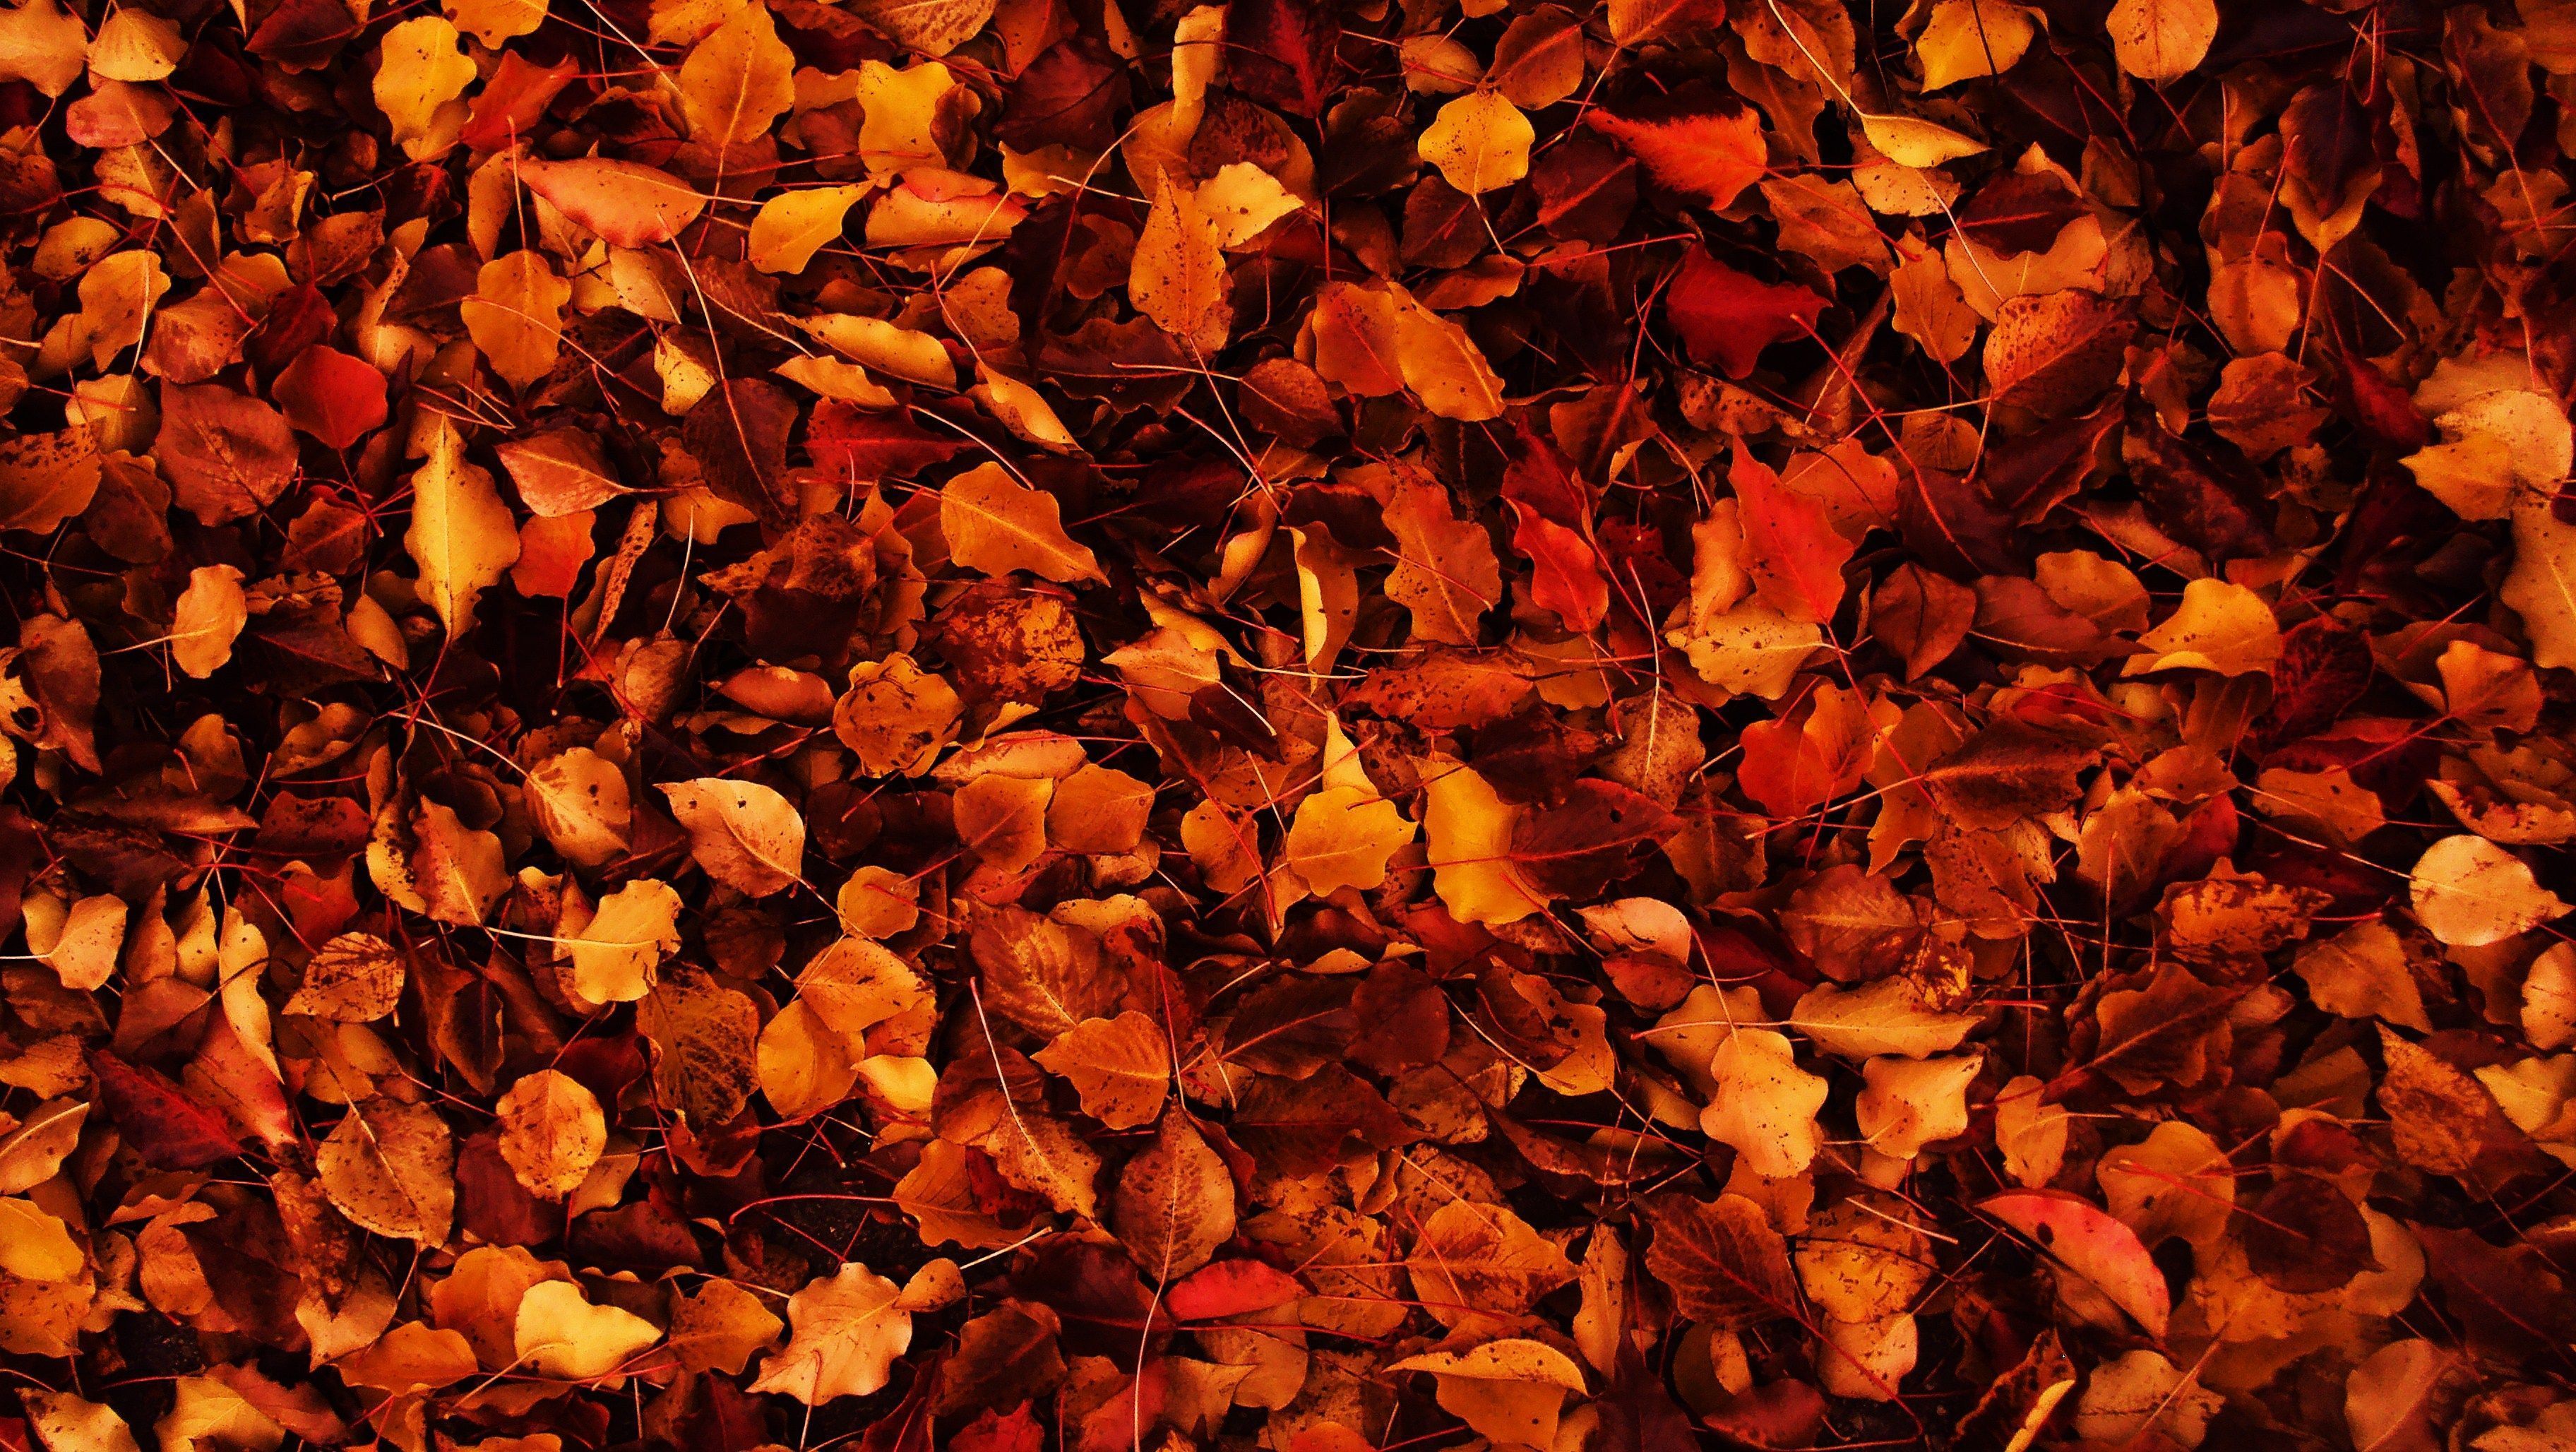 Autumn leaves quotes tumblr Tumblr autumn desktop wallpaper top free tumblr autumn desktop